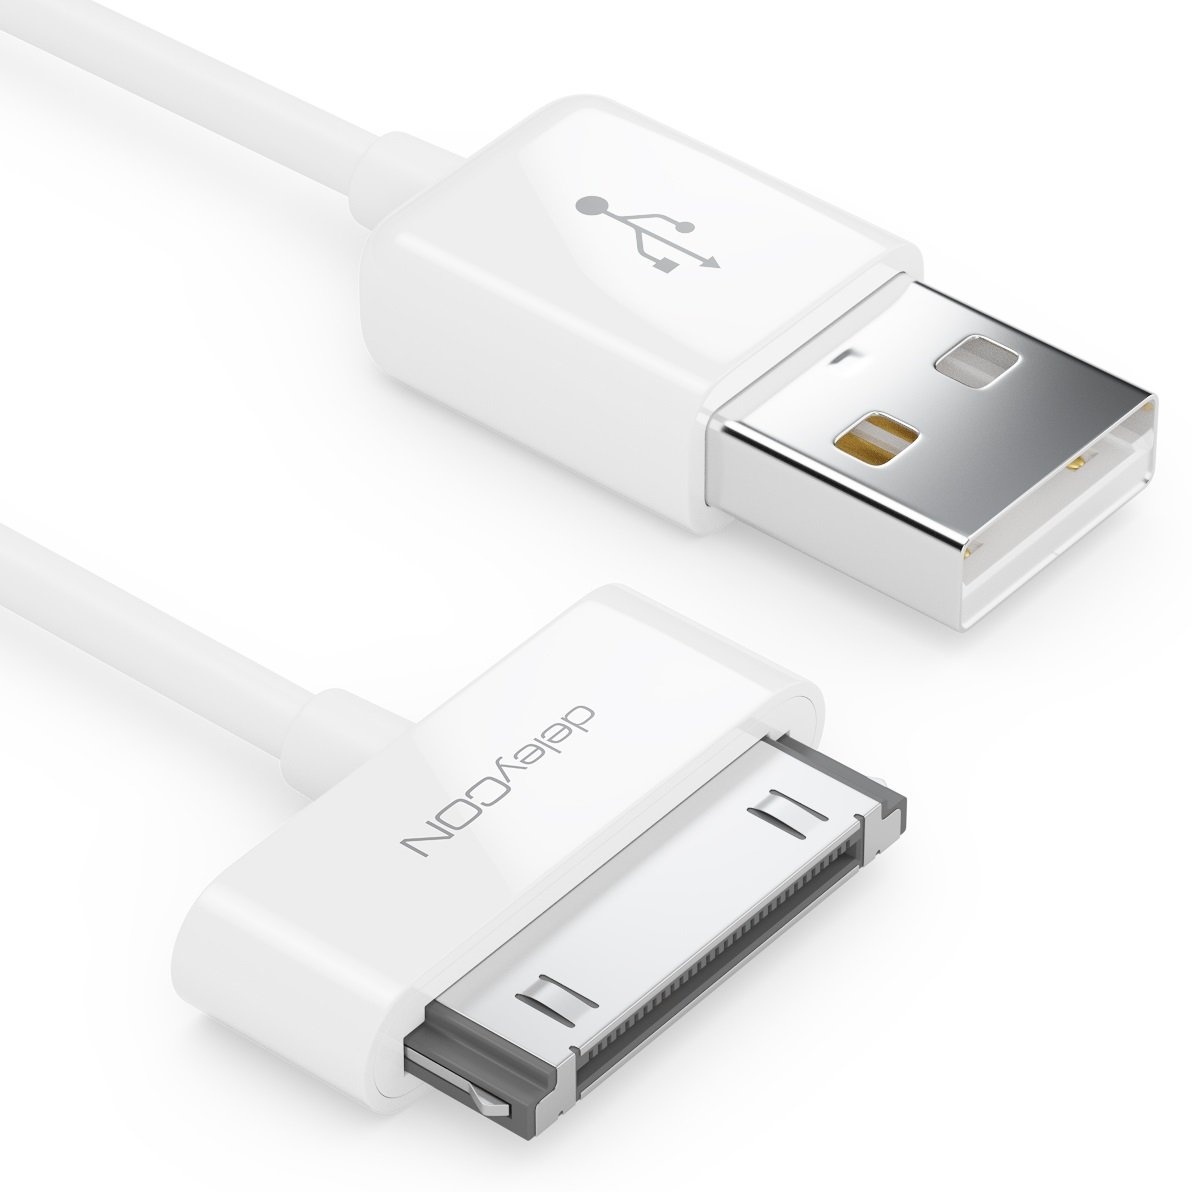 deleyCON 2m 30-Pin USB Kabel Dock Connector Sync-Kabel Ladekabel Datenkabel Kompatibel mit iPhone 4s 4 3Gs 3G iPad iPod - Weiß